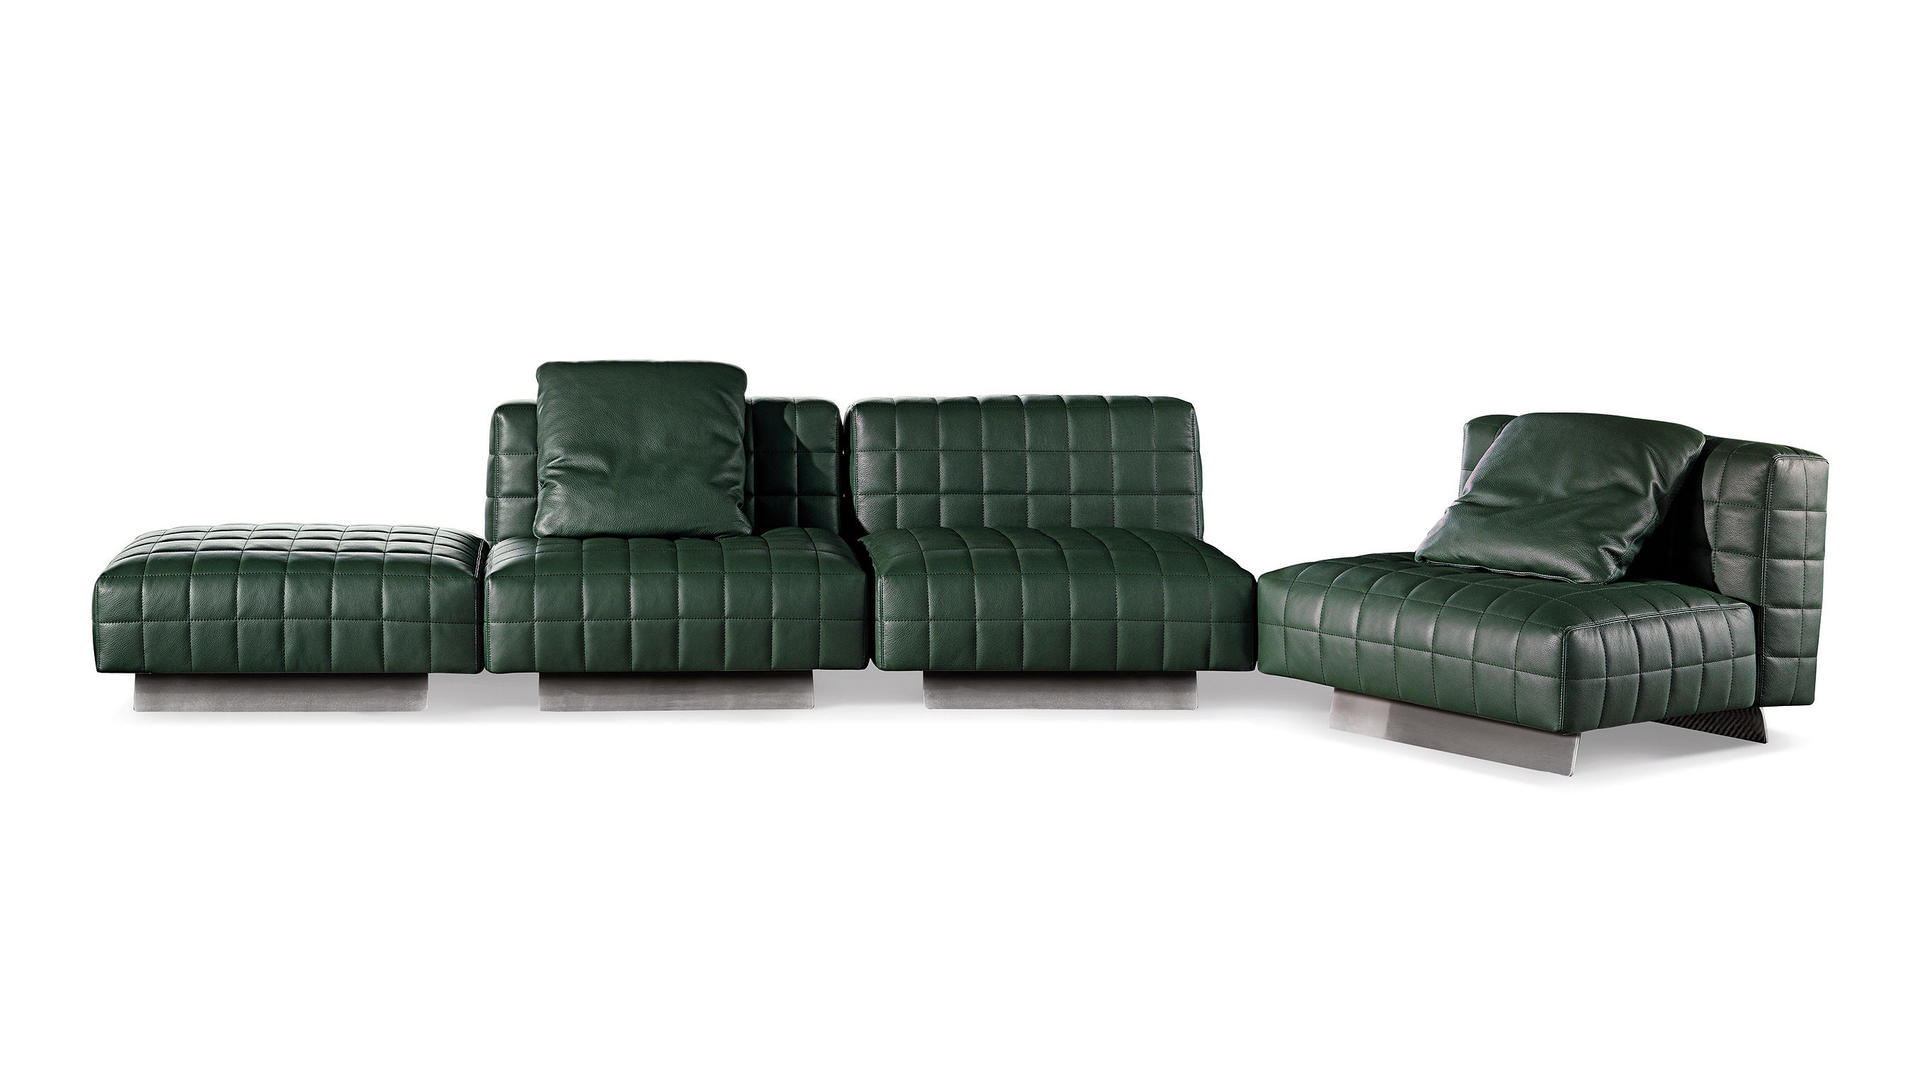 HORA Barneveld Minotti Twiggy bank modulaire sofa design meubelen designmeubelen 9.jpg